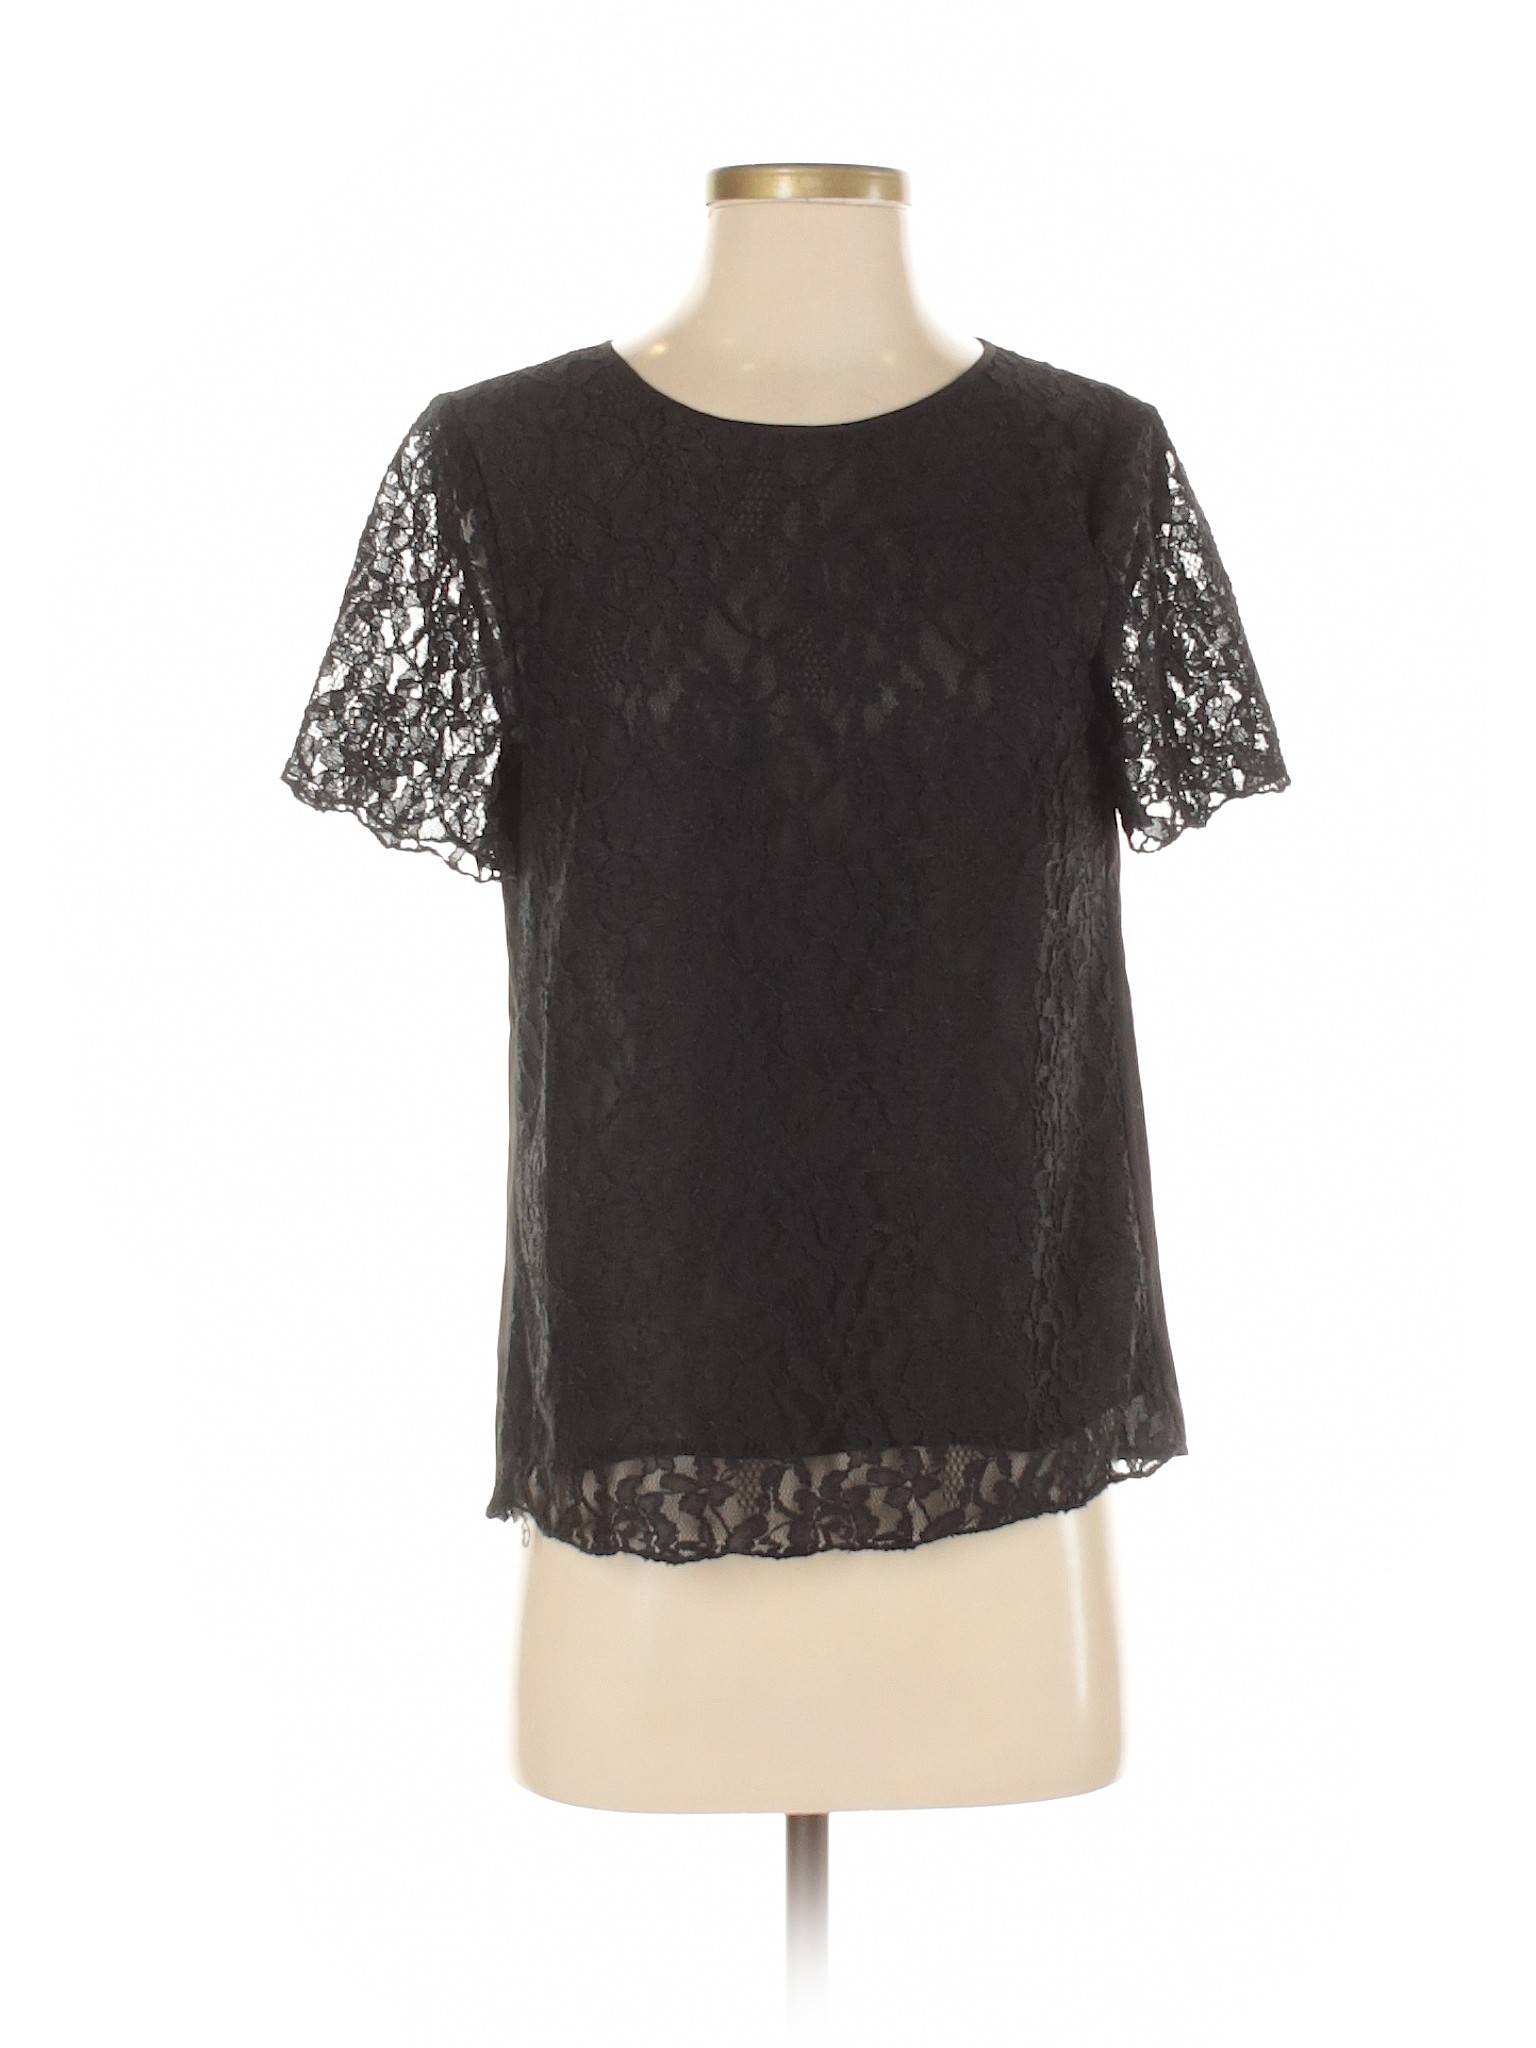 J.Crew Factory Store Women Black Short Sleeve Blouse 2 | eBay